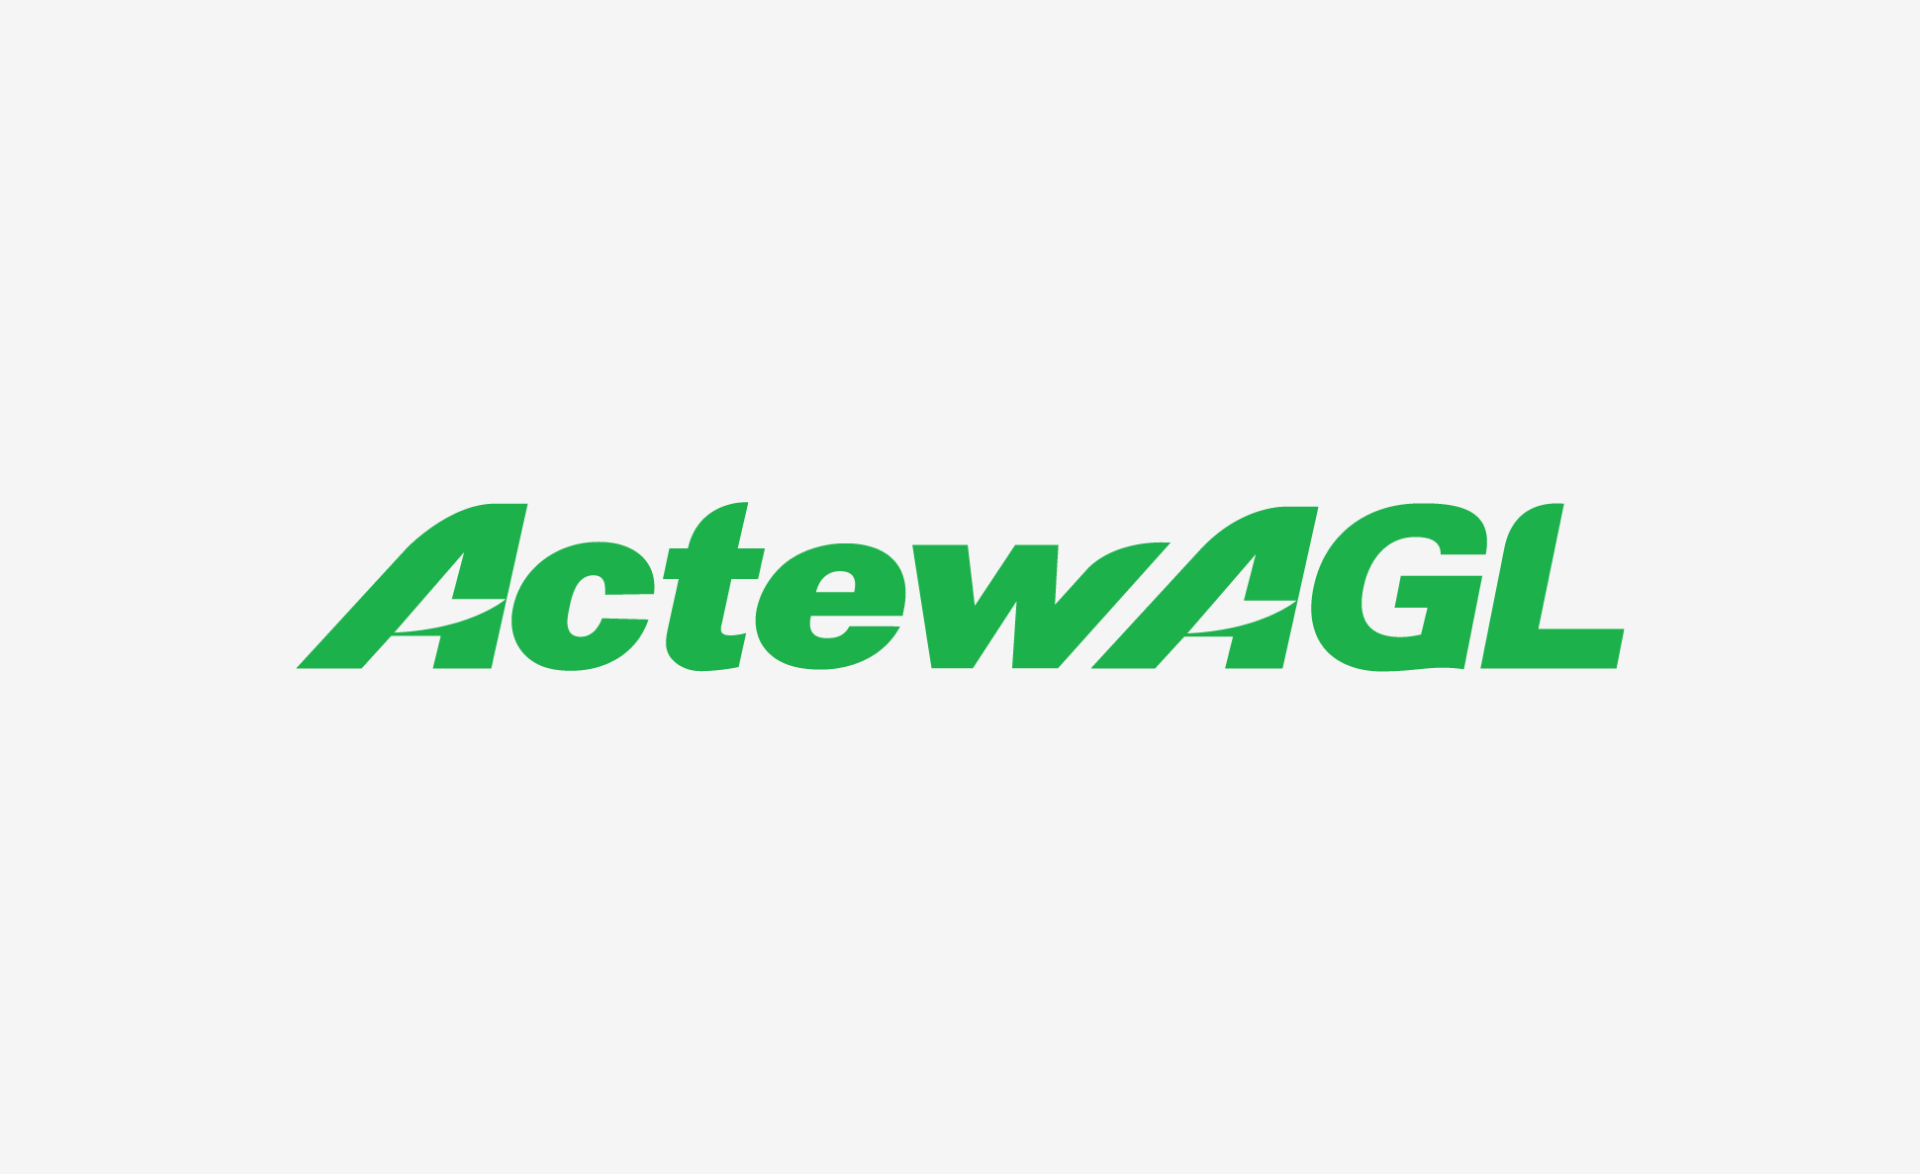 Website retailer logo template Actwell AGL